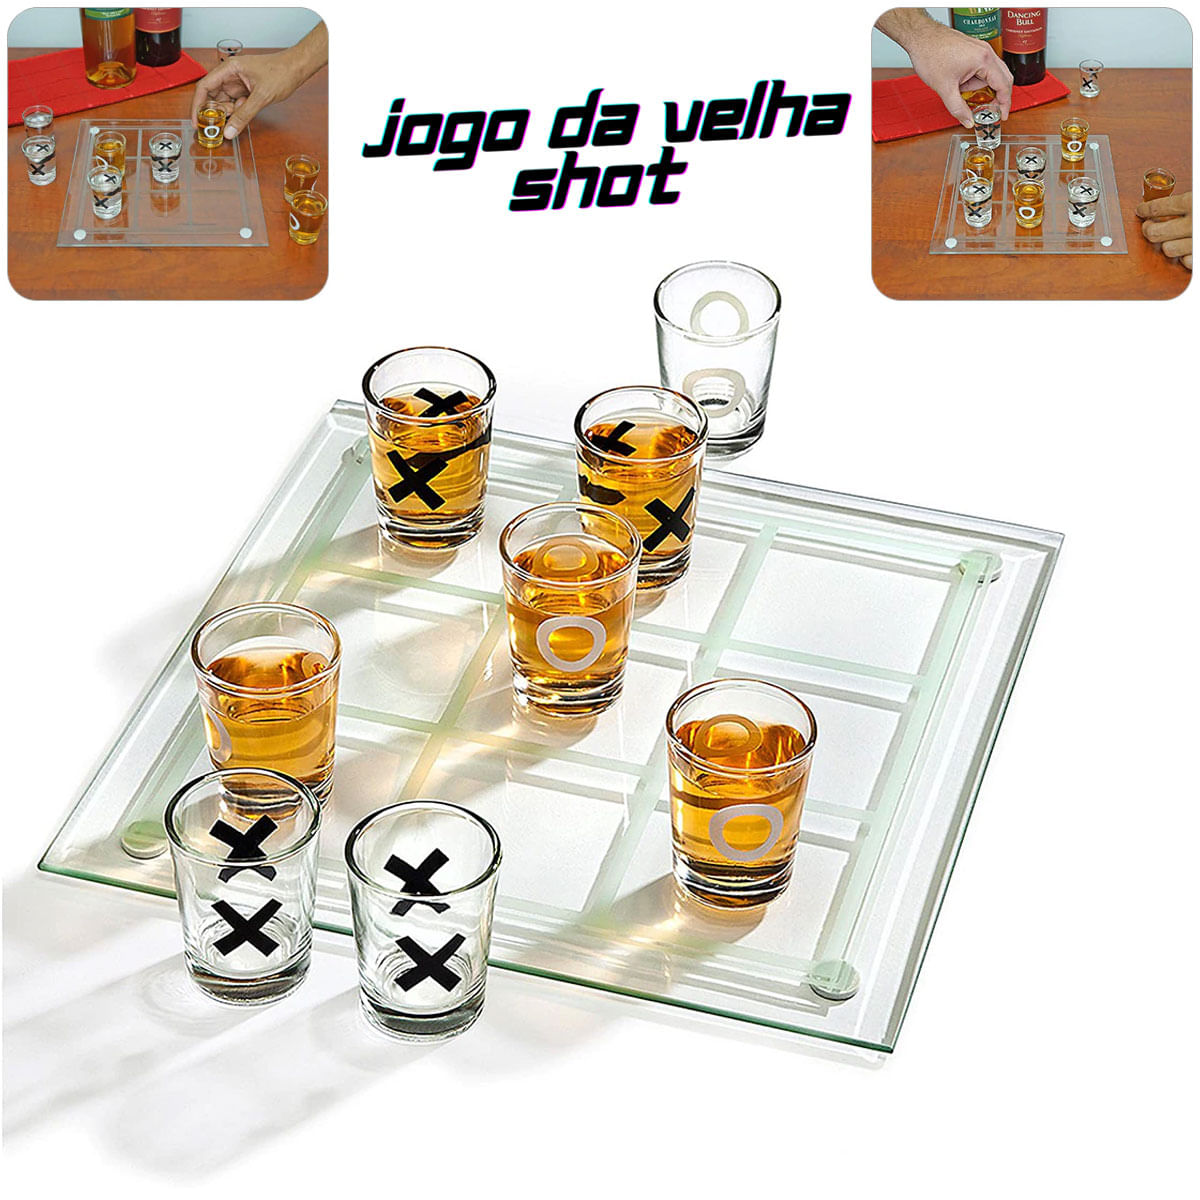 JOGO DE XADREZ SHOT DRINK TABULEIRO DE VIDRO